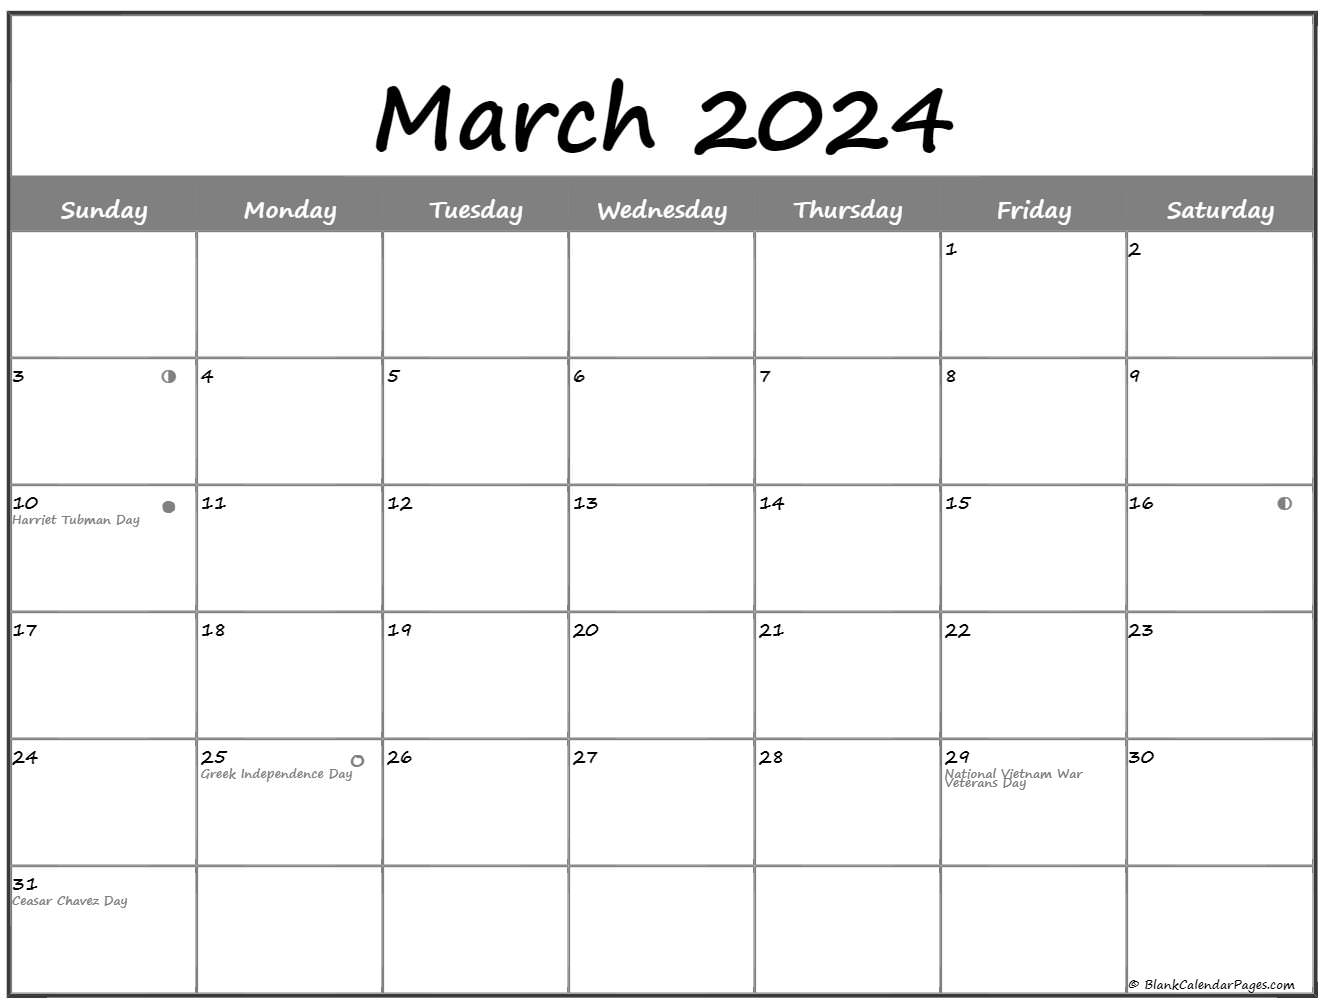 Lunar Calendar March 2022 March 2022 Lunar Calendar | Moon Phase Calendar